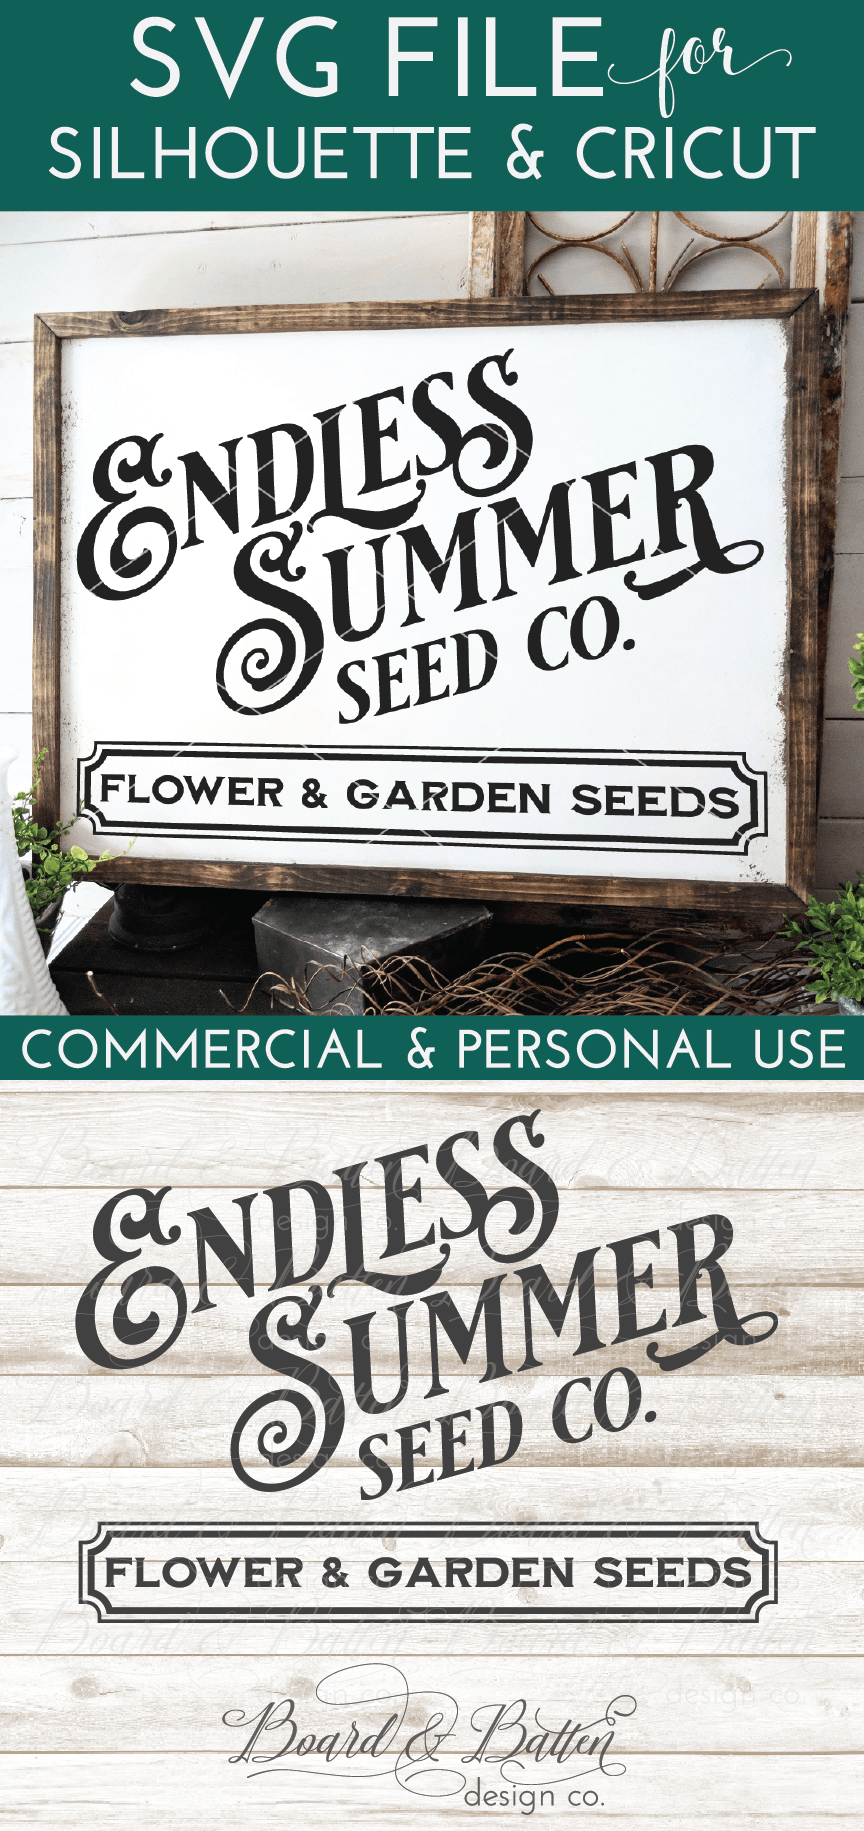 Download Endless Summer Seed Company Svg File For Gardeners Board Batten Design Co